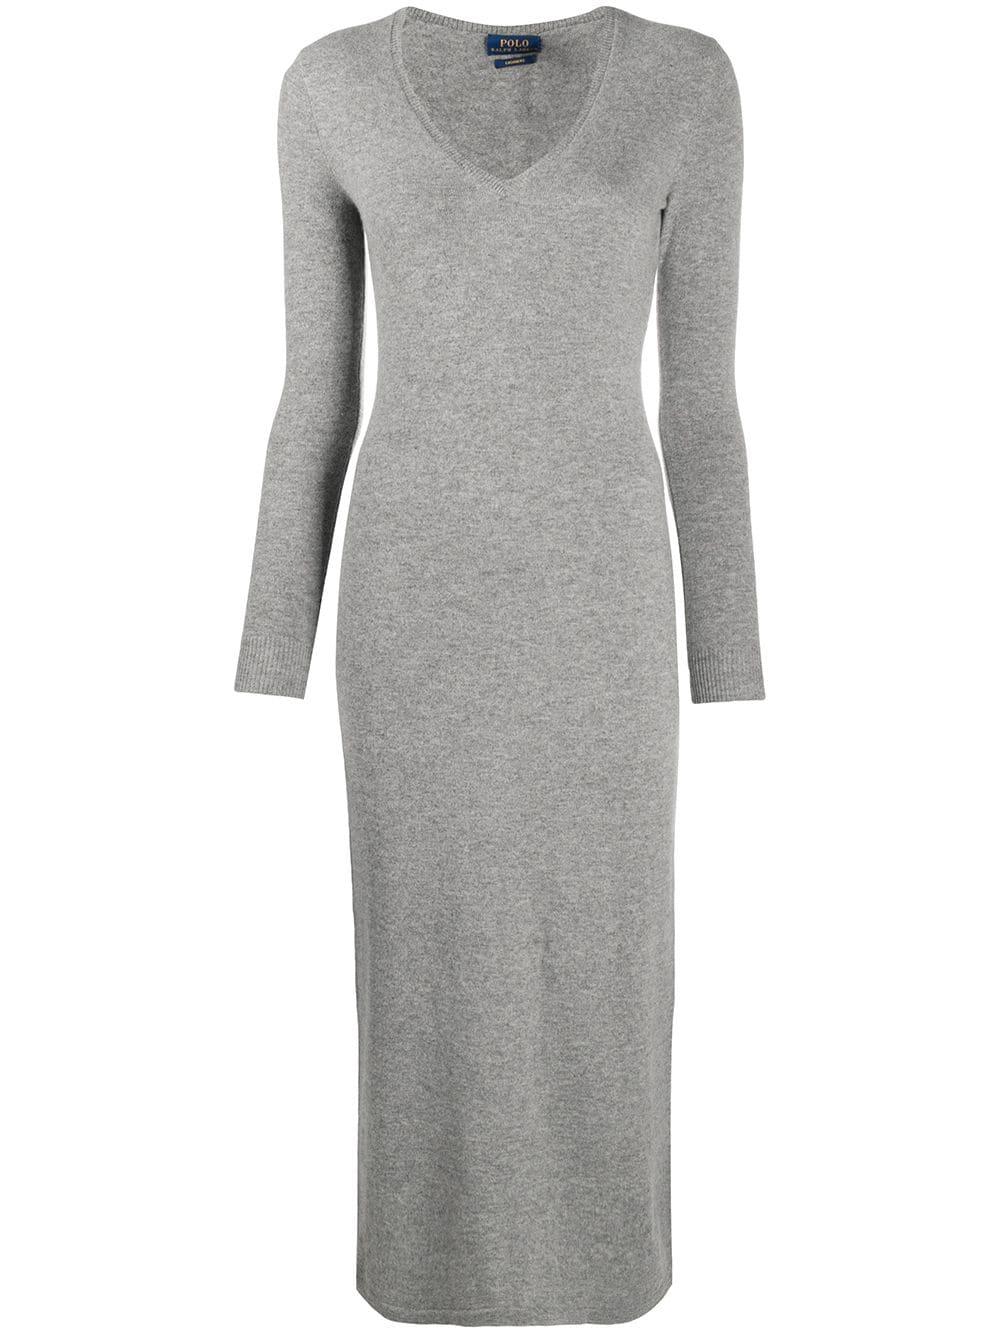 Polo Ralph Lauren V-neck Cashmere Dress in Grey (Grey) | Lyst Canada